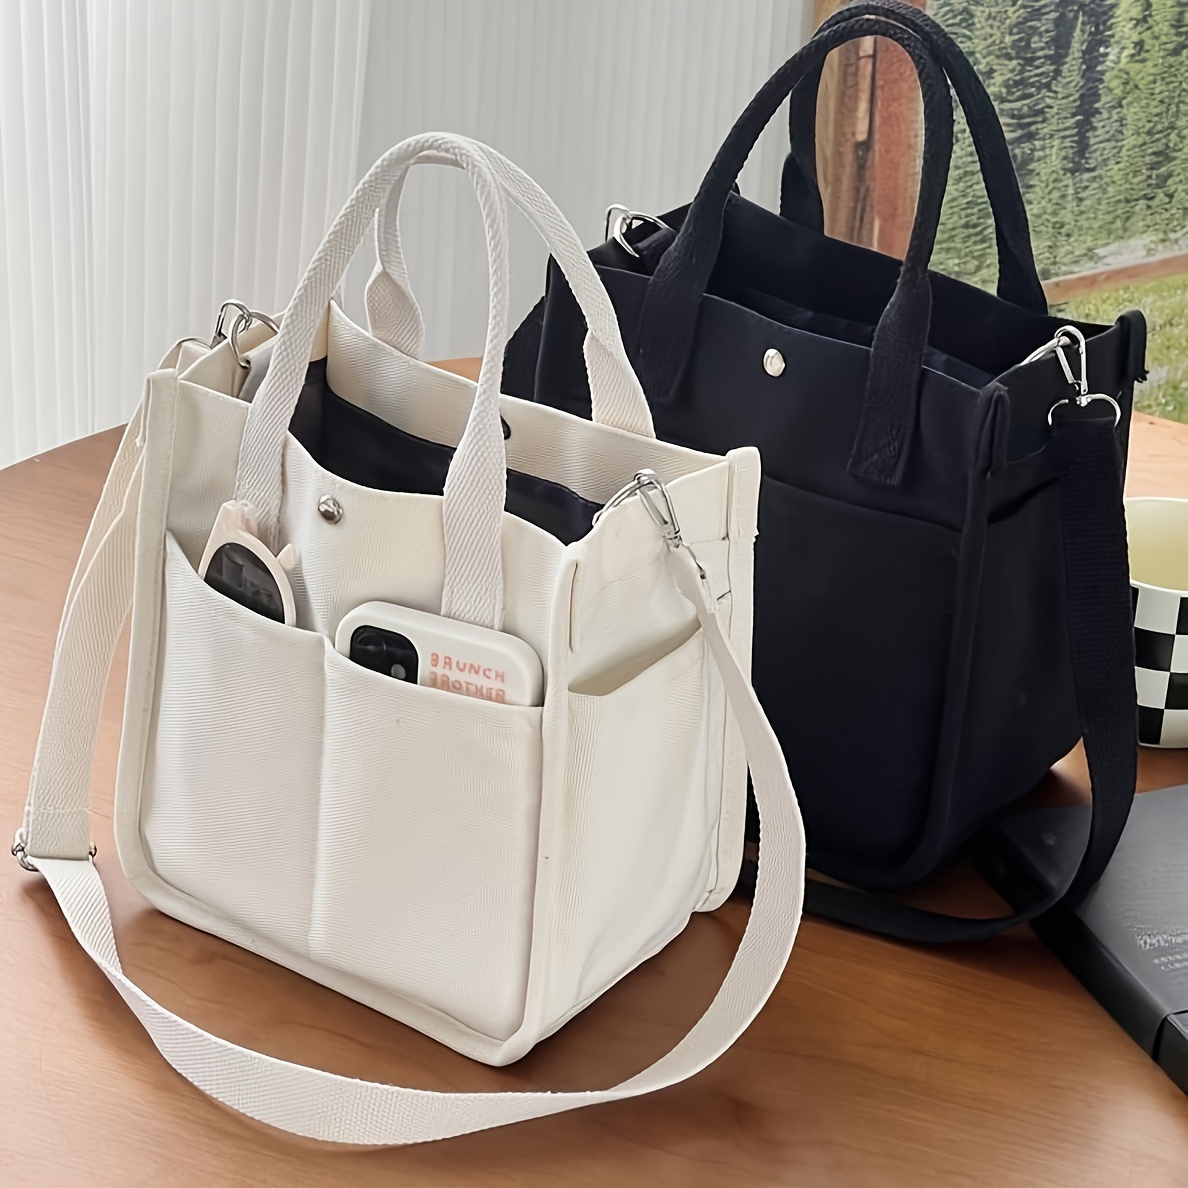 

Mini Canvas Satchel Bag With Top Handle, Multi Pockets Shoulder Bag, Portable Lunch Box Storage Bag